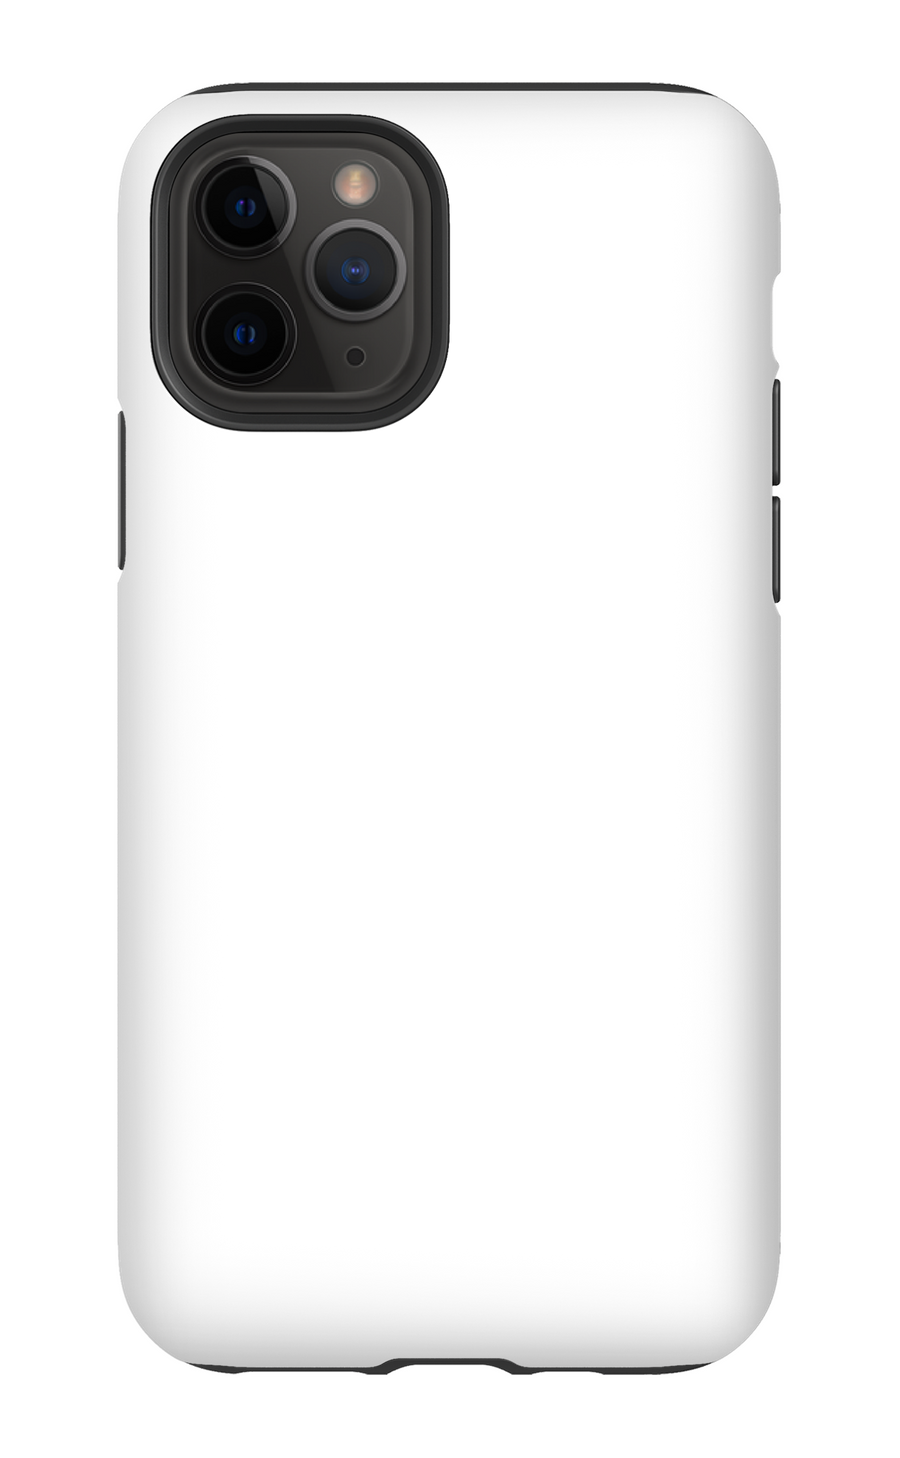 iPhone 11 Pro Cases